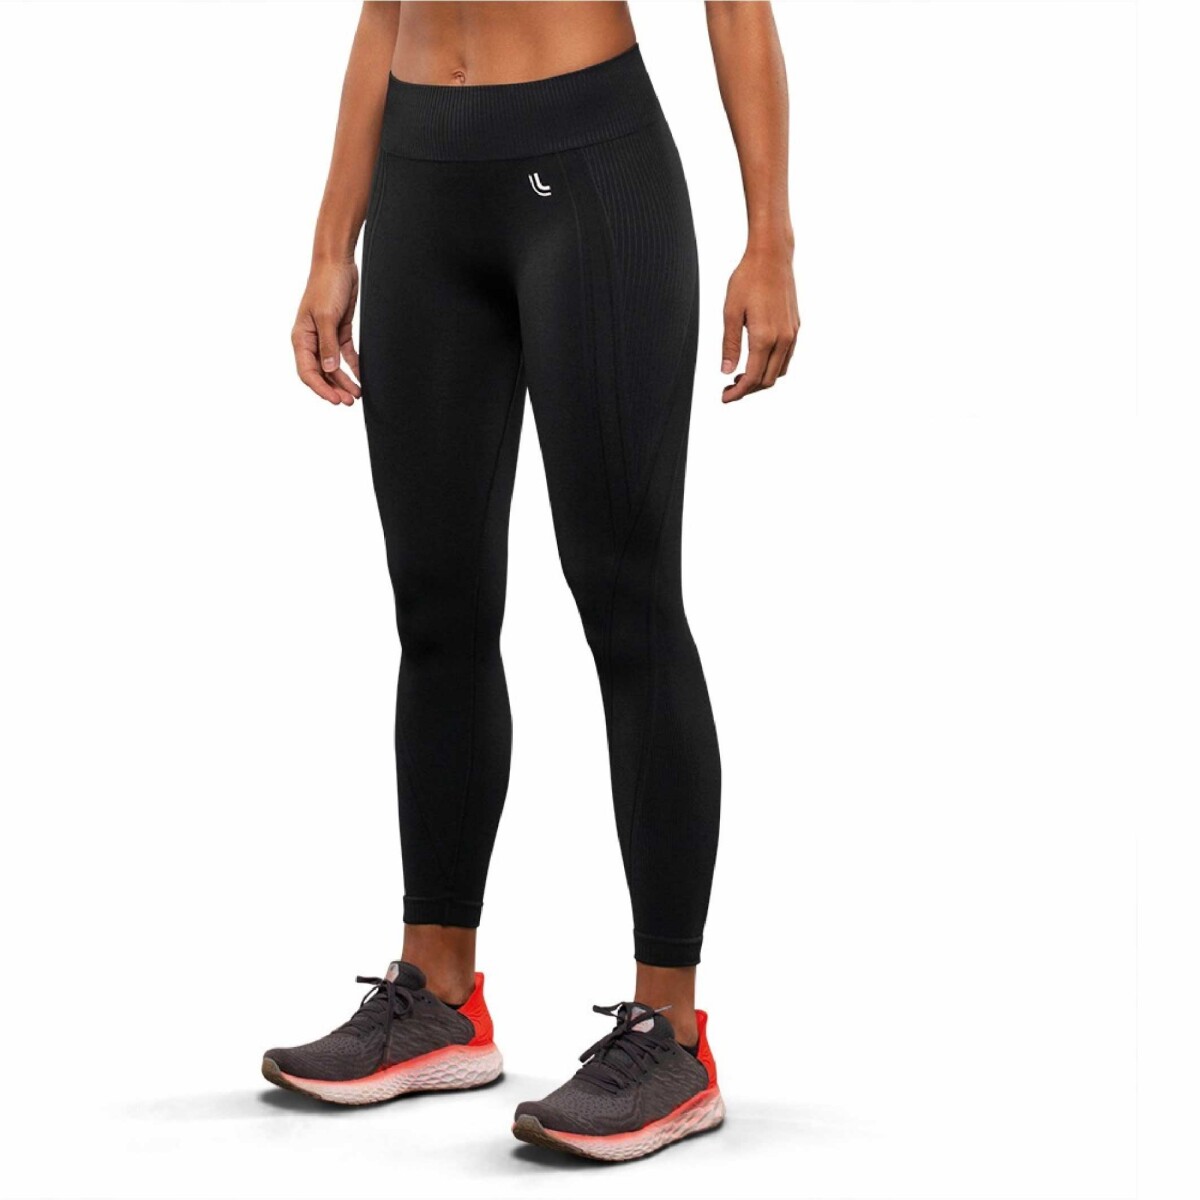 Calza Larga Deportiva Para Mujer Lupo Legging Max Core - Negro 